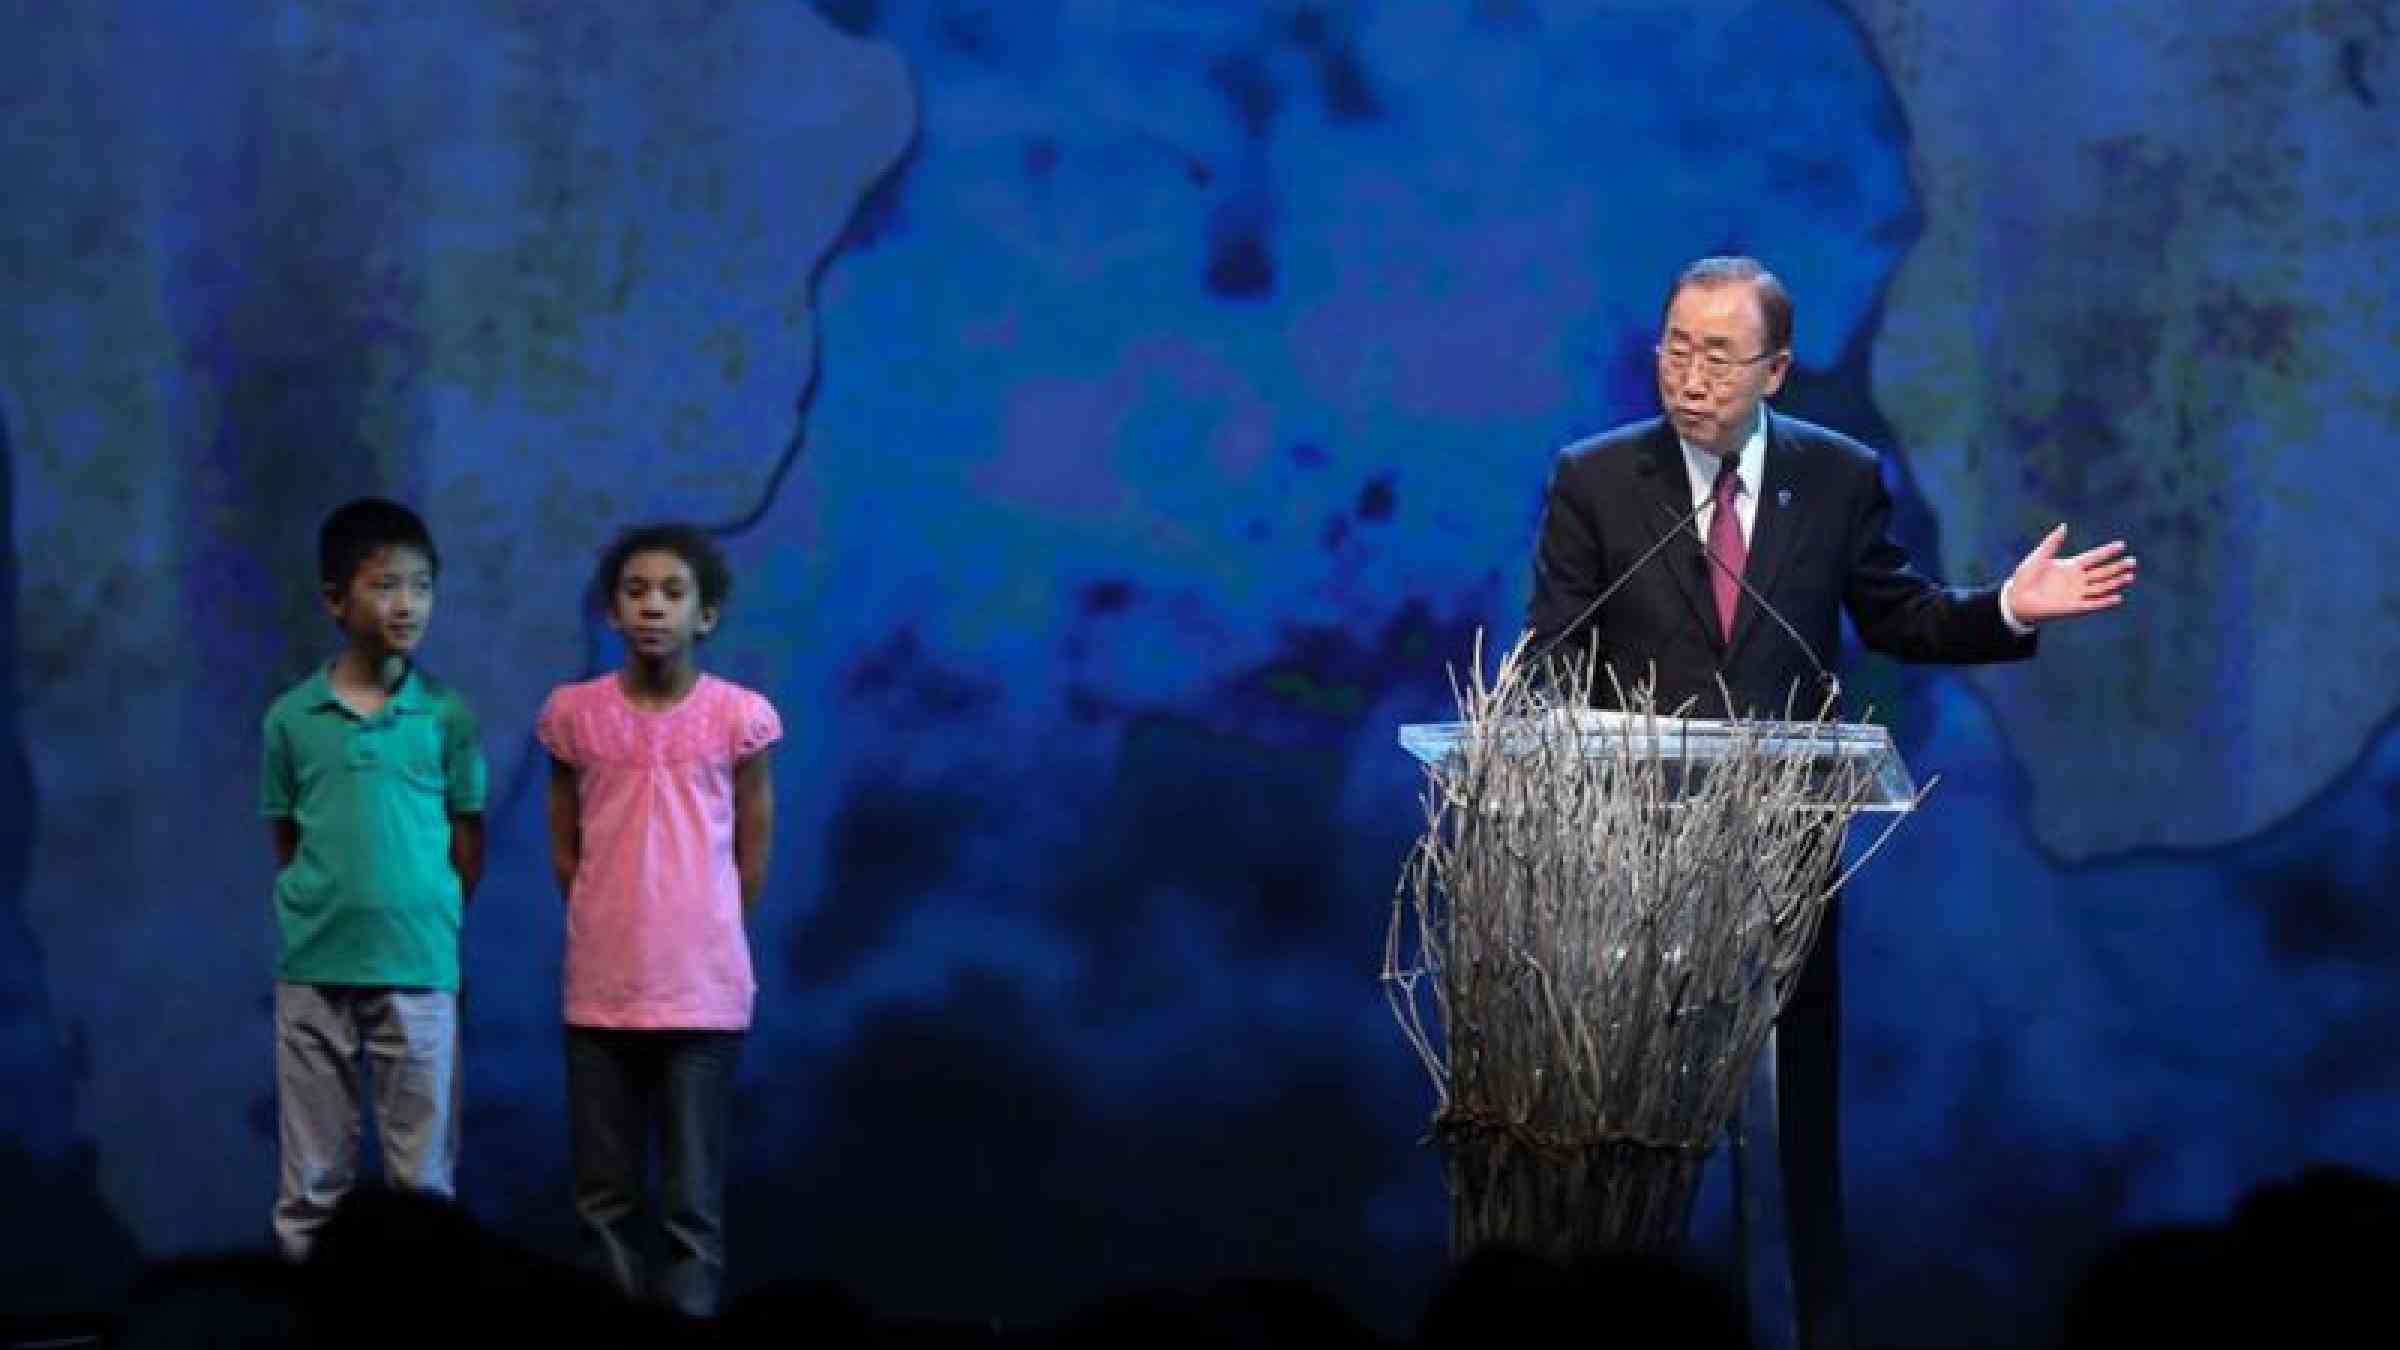 UN Secretary General Mr. Ban Ki-moon at the opening today of the World Humanitarian Summit